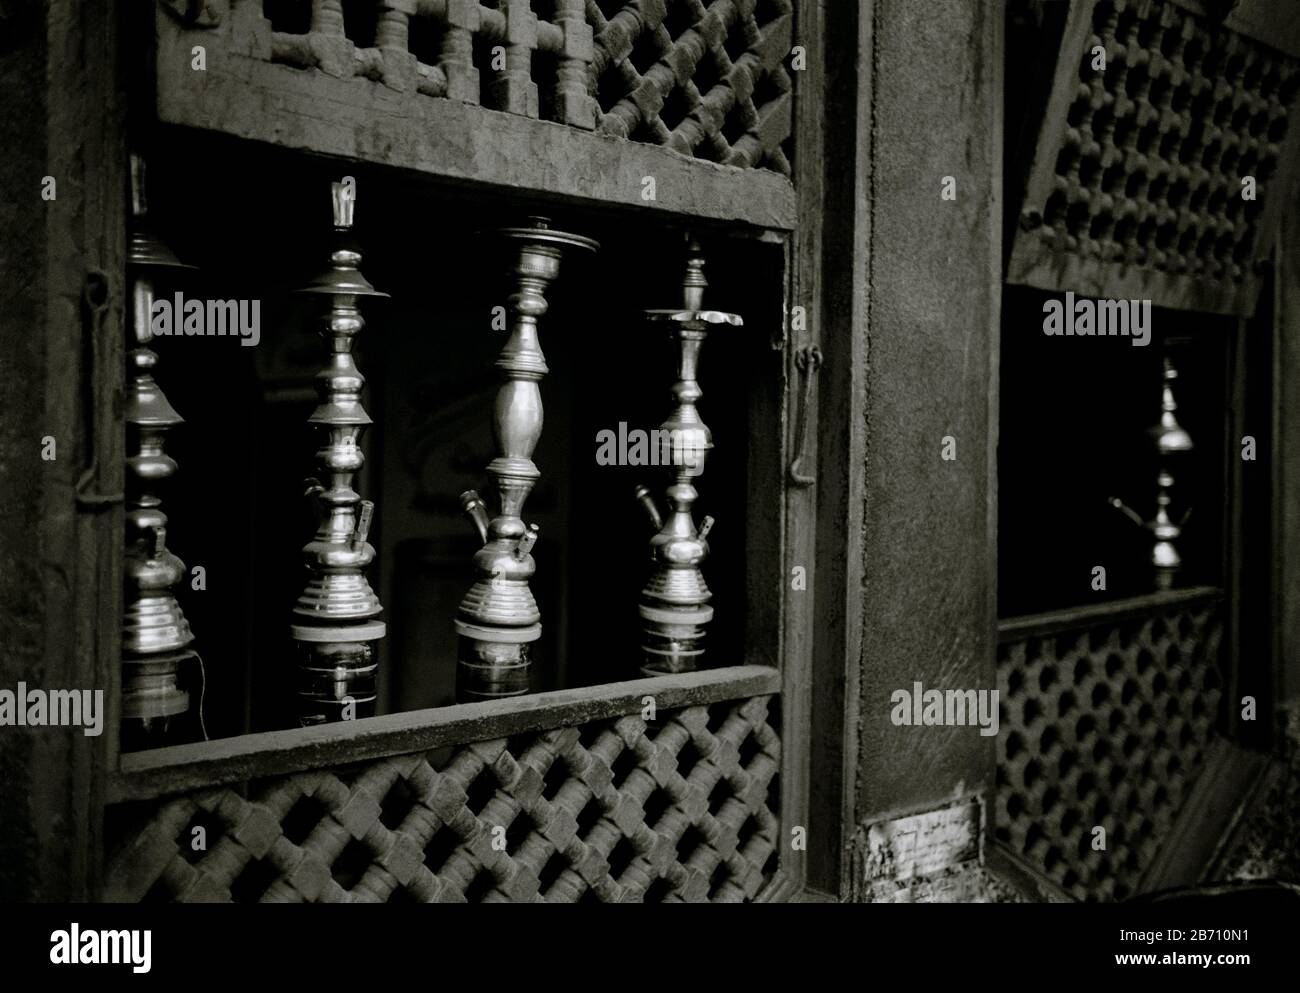 Reise-Fotografie in Schwarz und Weiß - Shisha Shisha Pfeifen in Khan Al Khalili in Kairo in Ägypten in Nordafrika Naher Osten Stockfoto